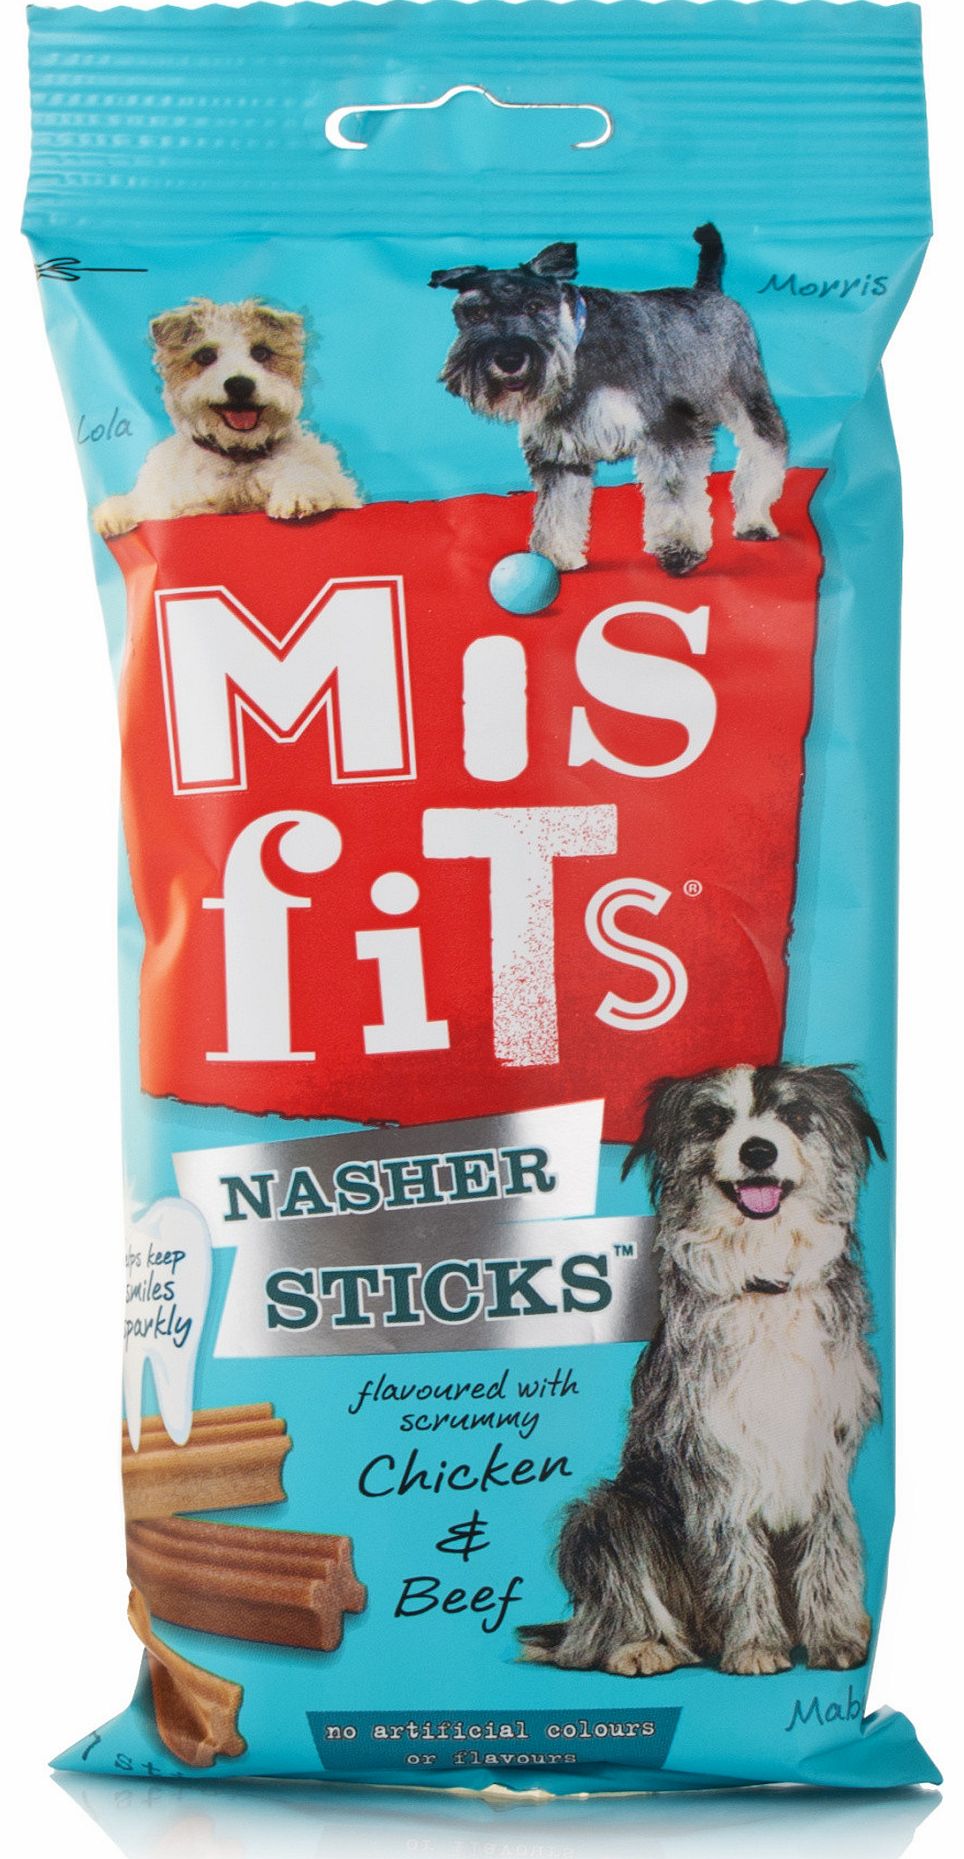 Misfits Nasher Sticks Dog Treats